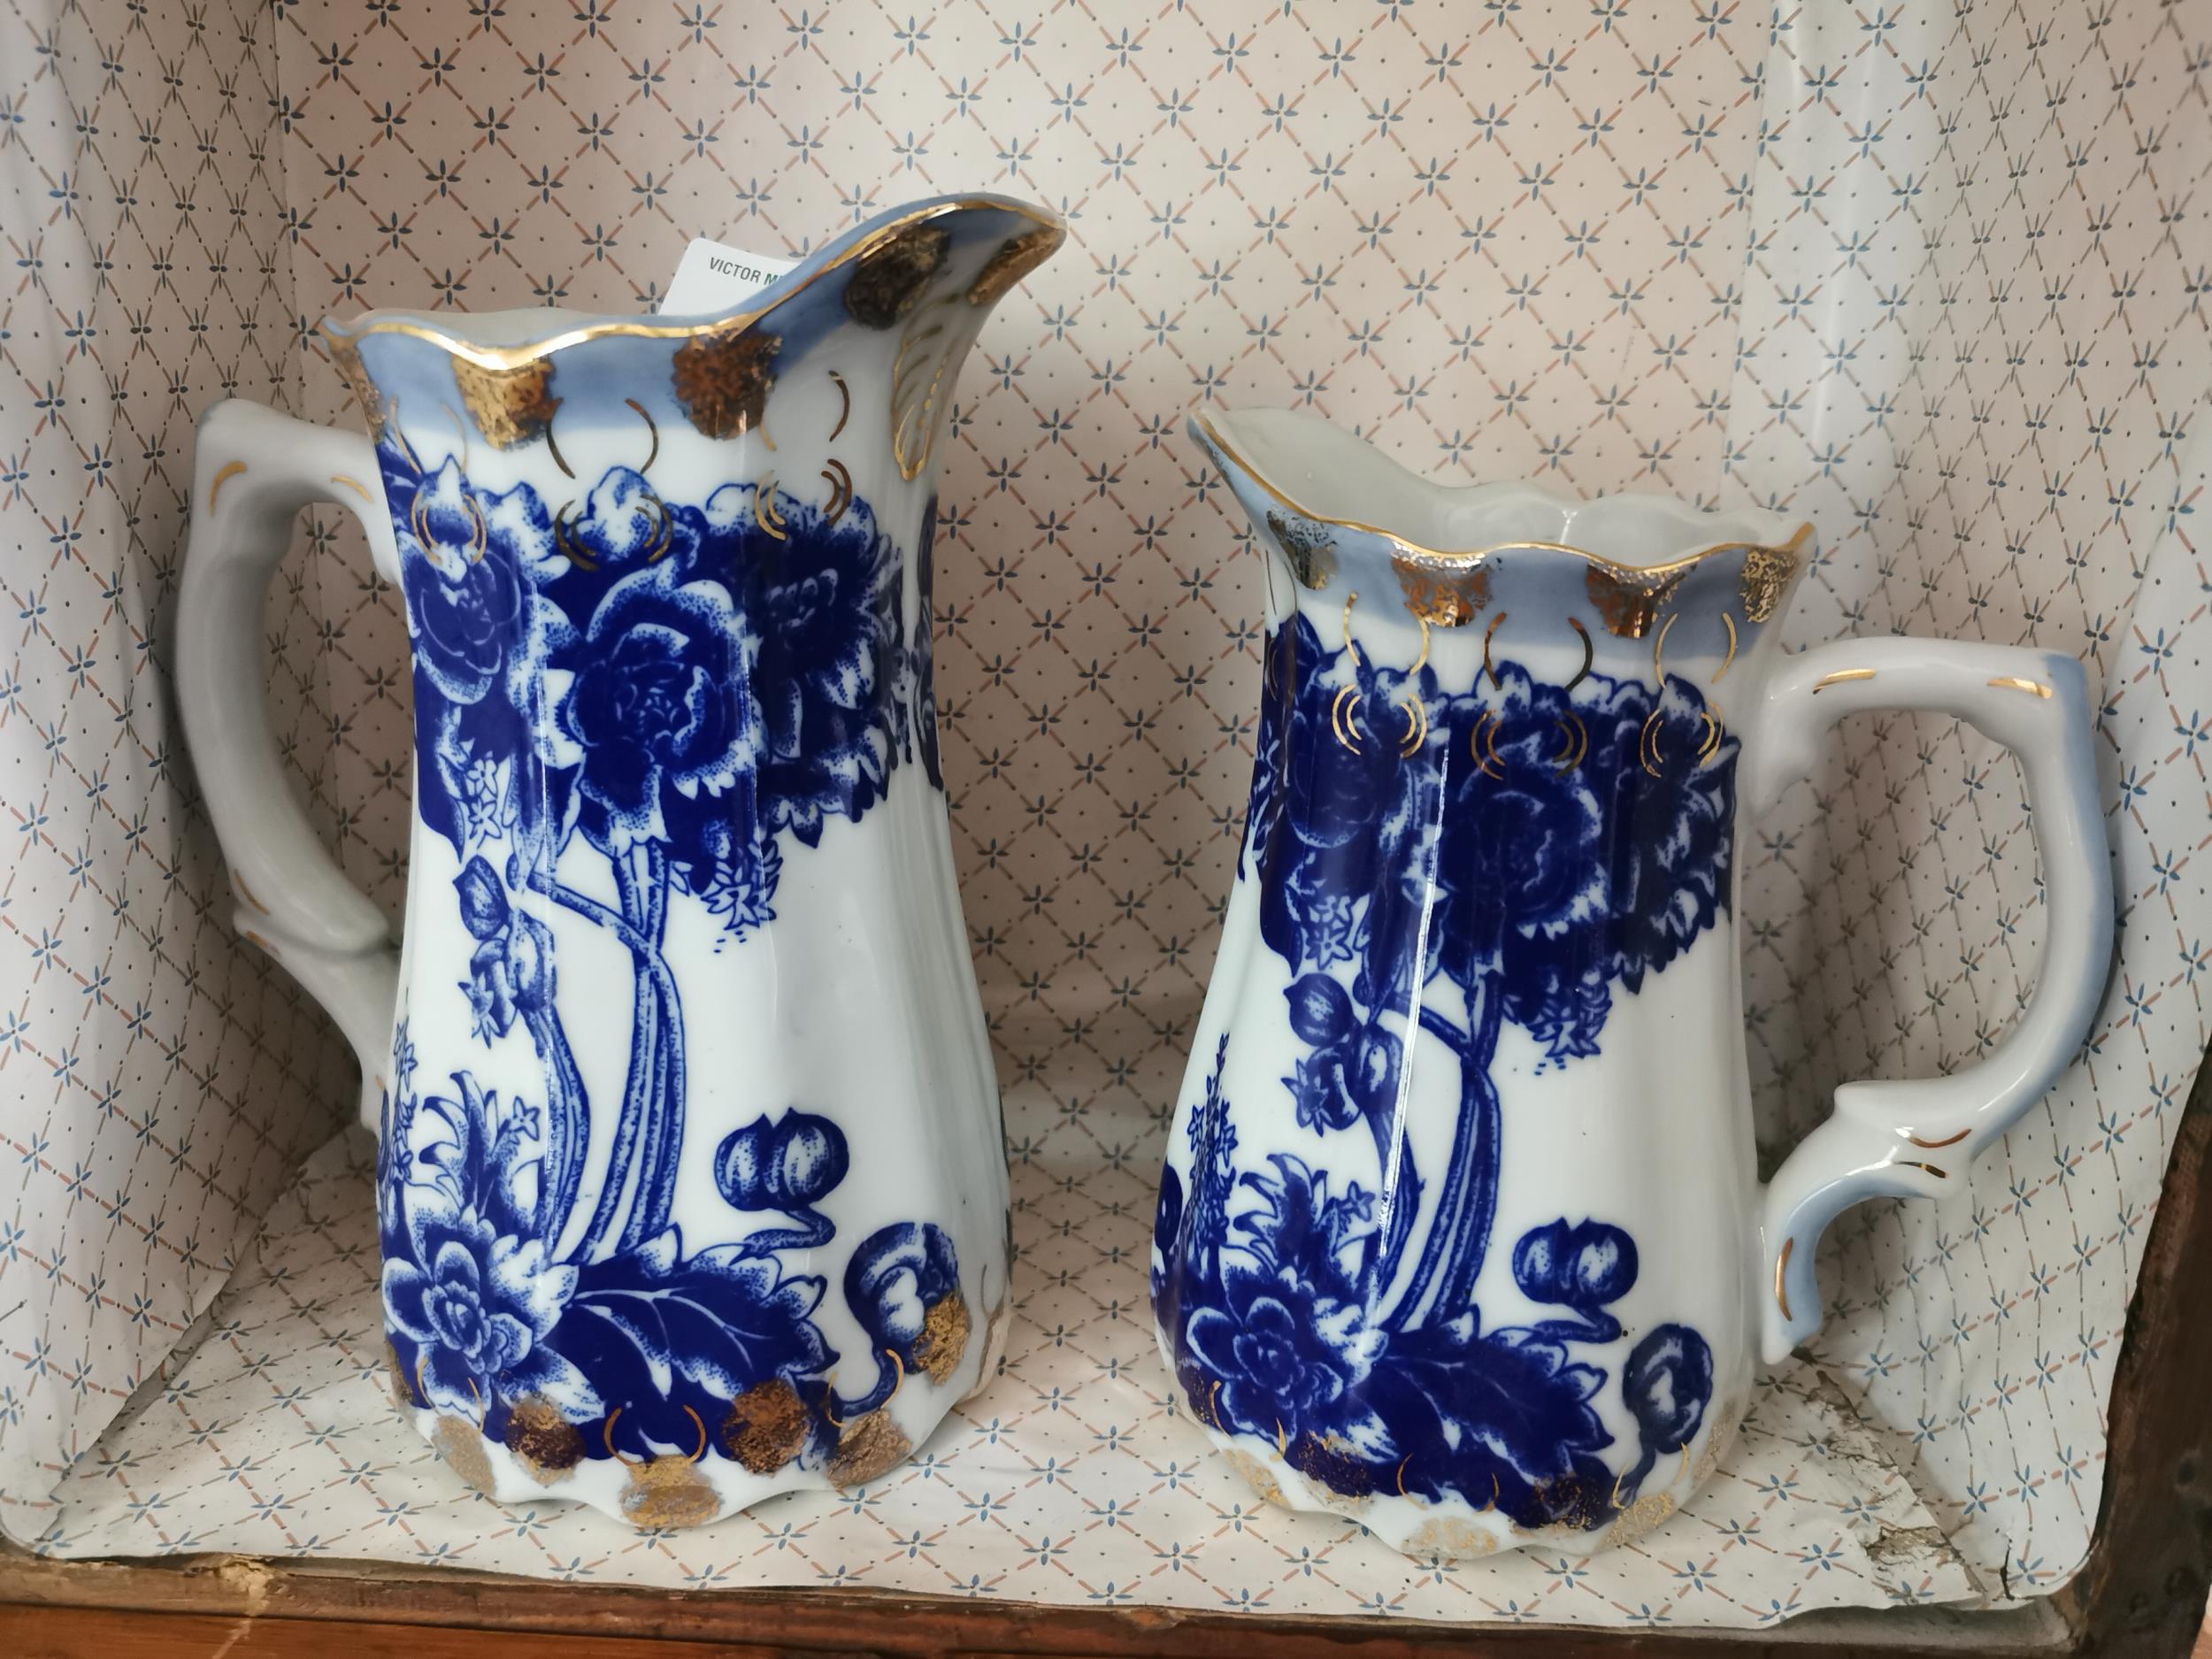 Set of five graduated blue and white ceramic jugs { 21cm H X 14cm Dia - 11cm H X 9cm Dia }. - Image 3 of 4